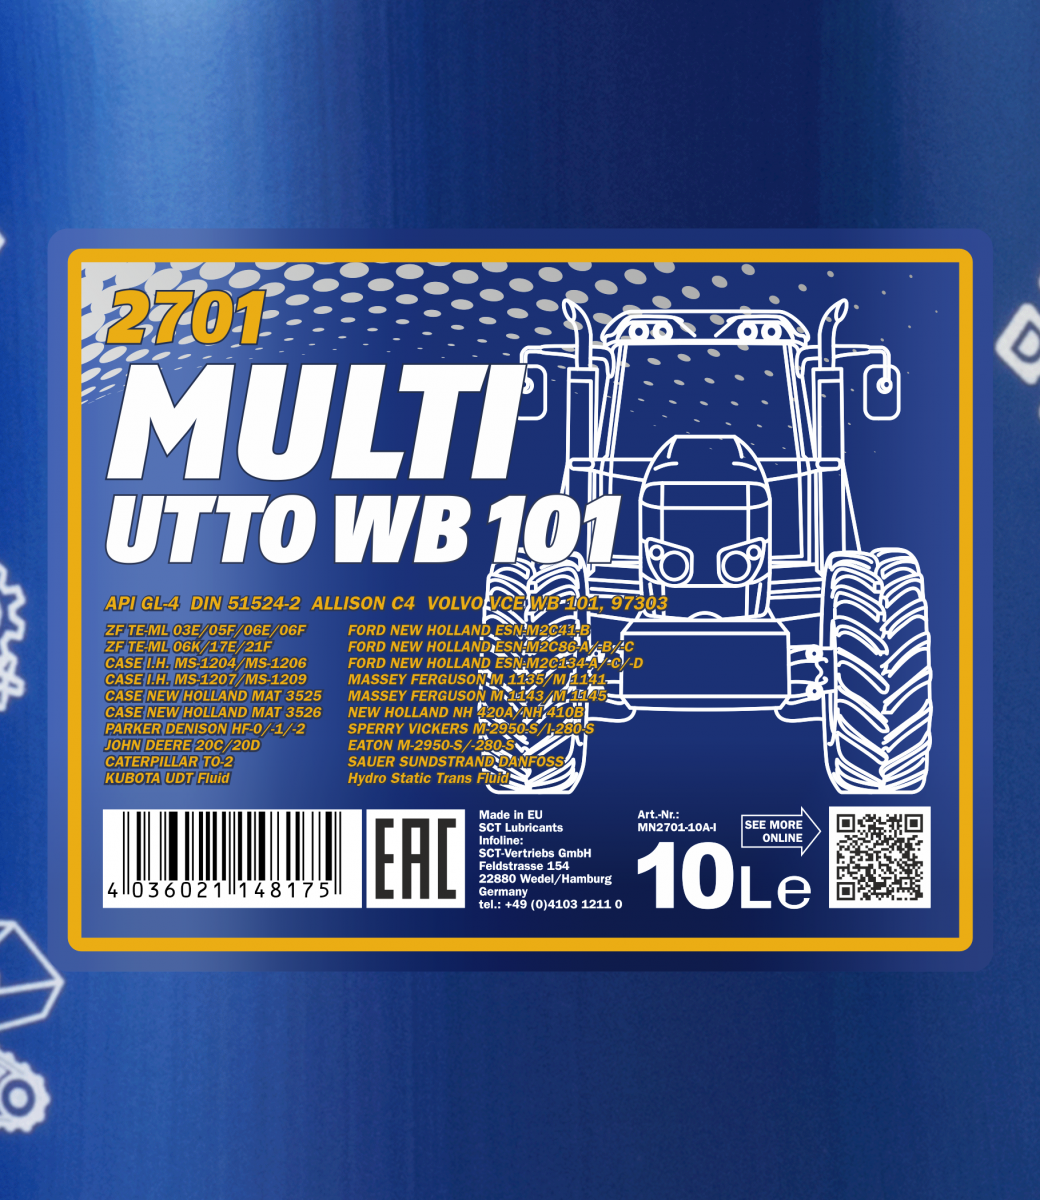 Mannol - 2701 Multi UTTO WB 101